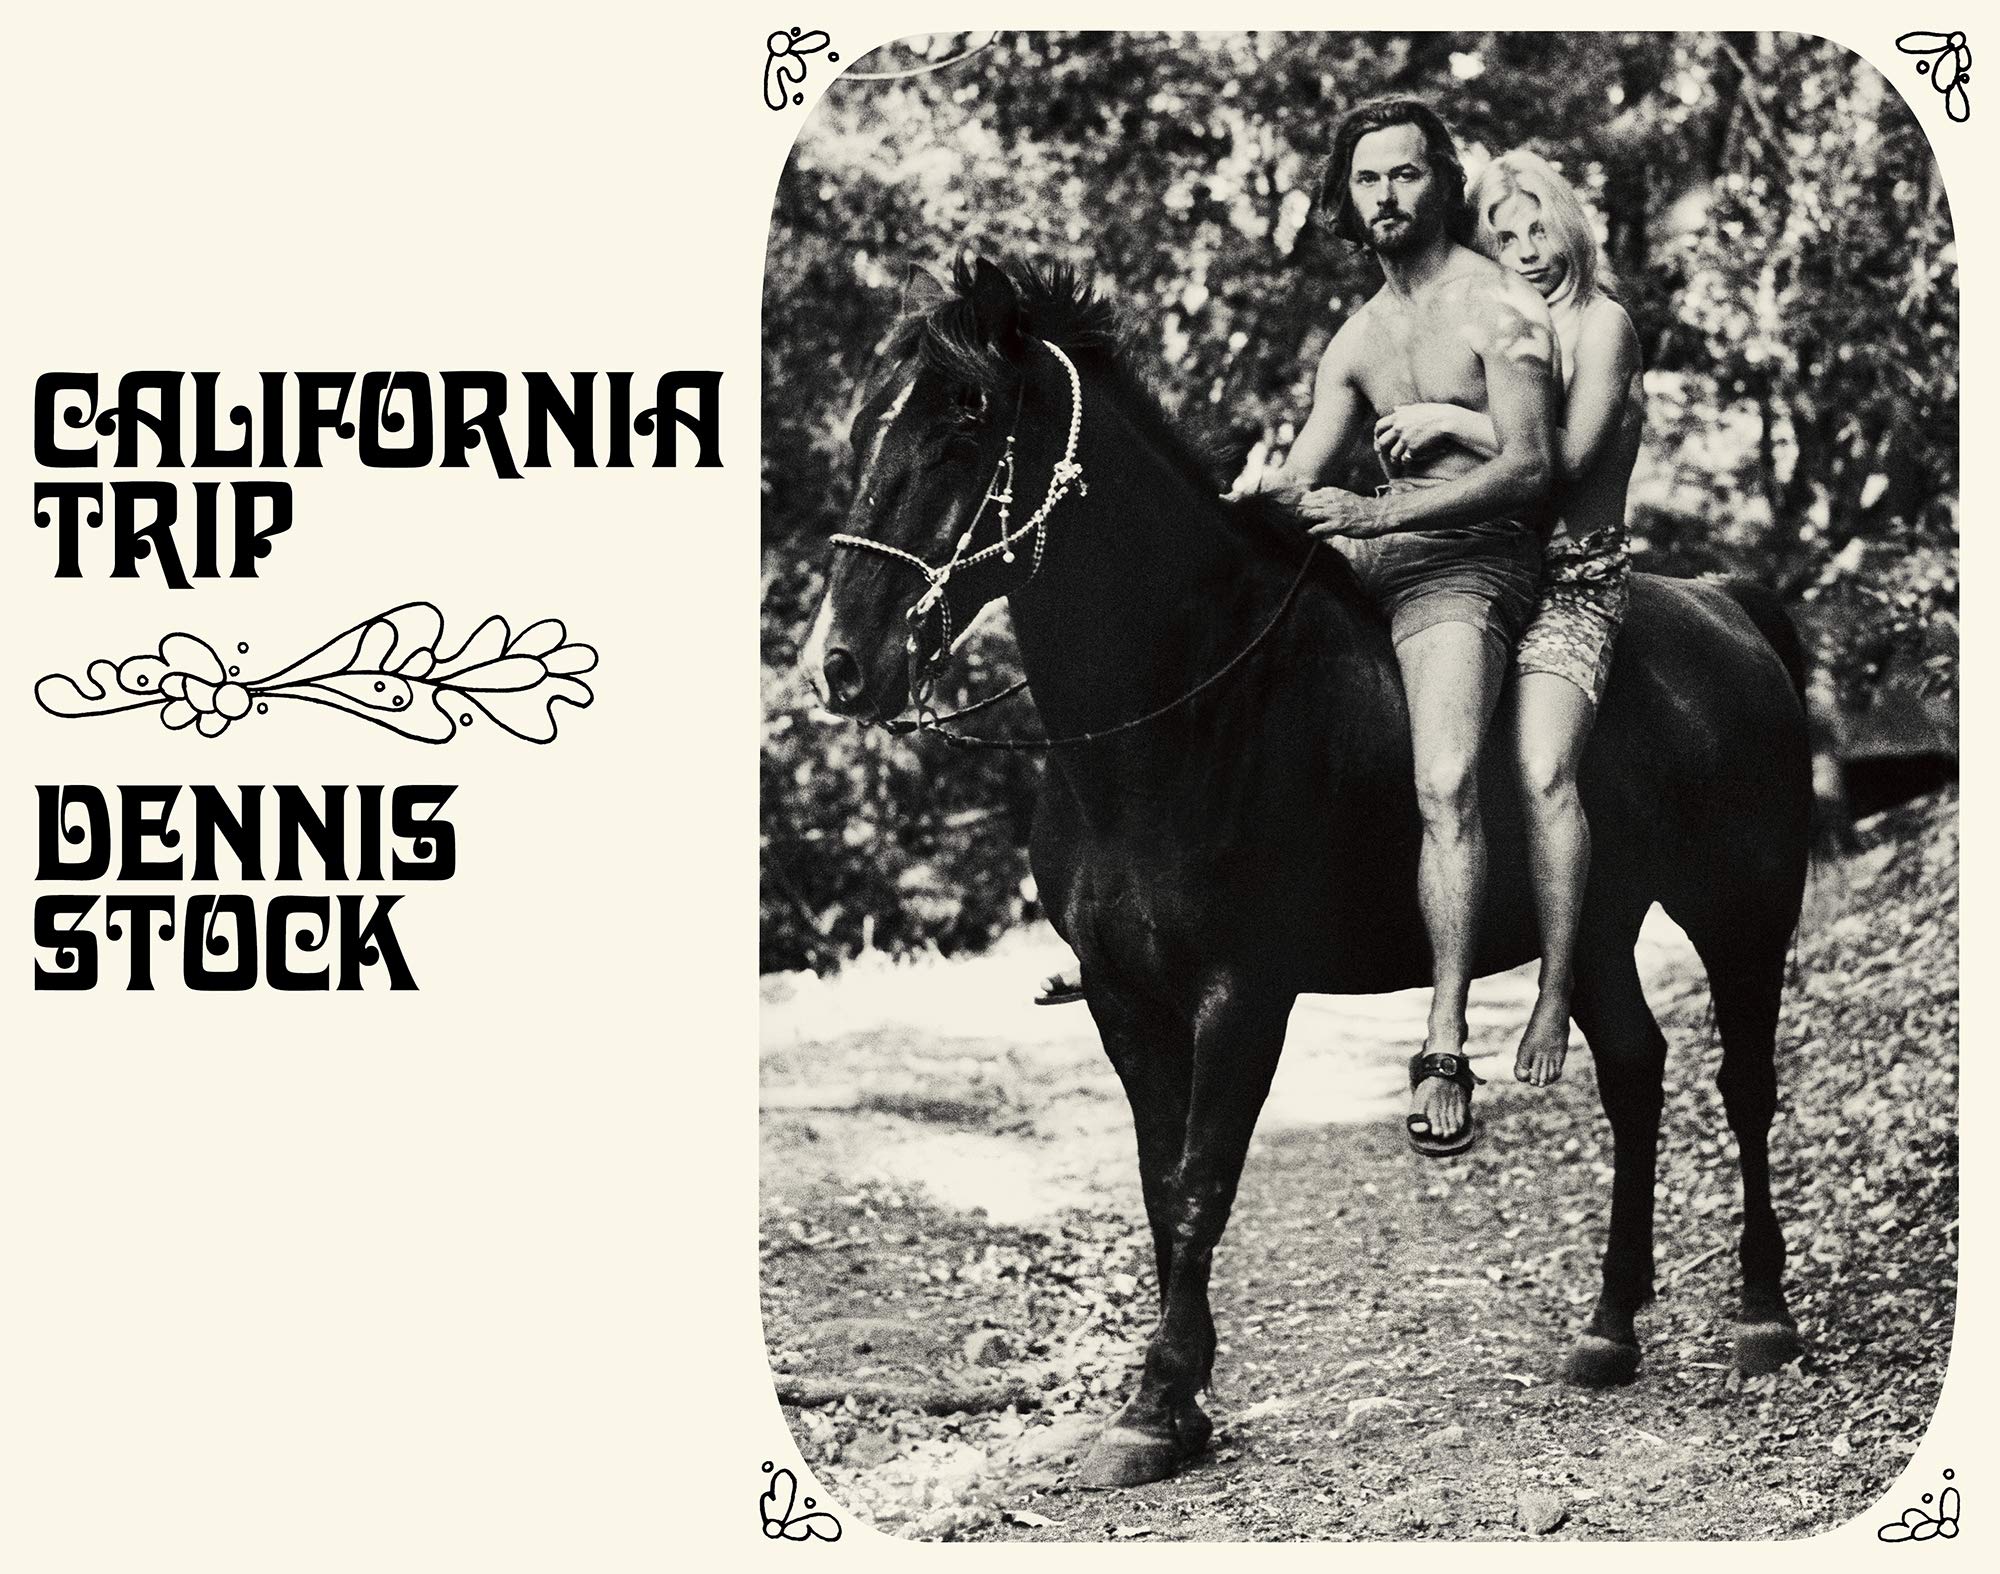 Dennis Stock, California Trip, cover